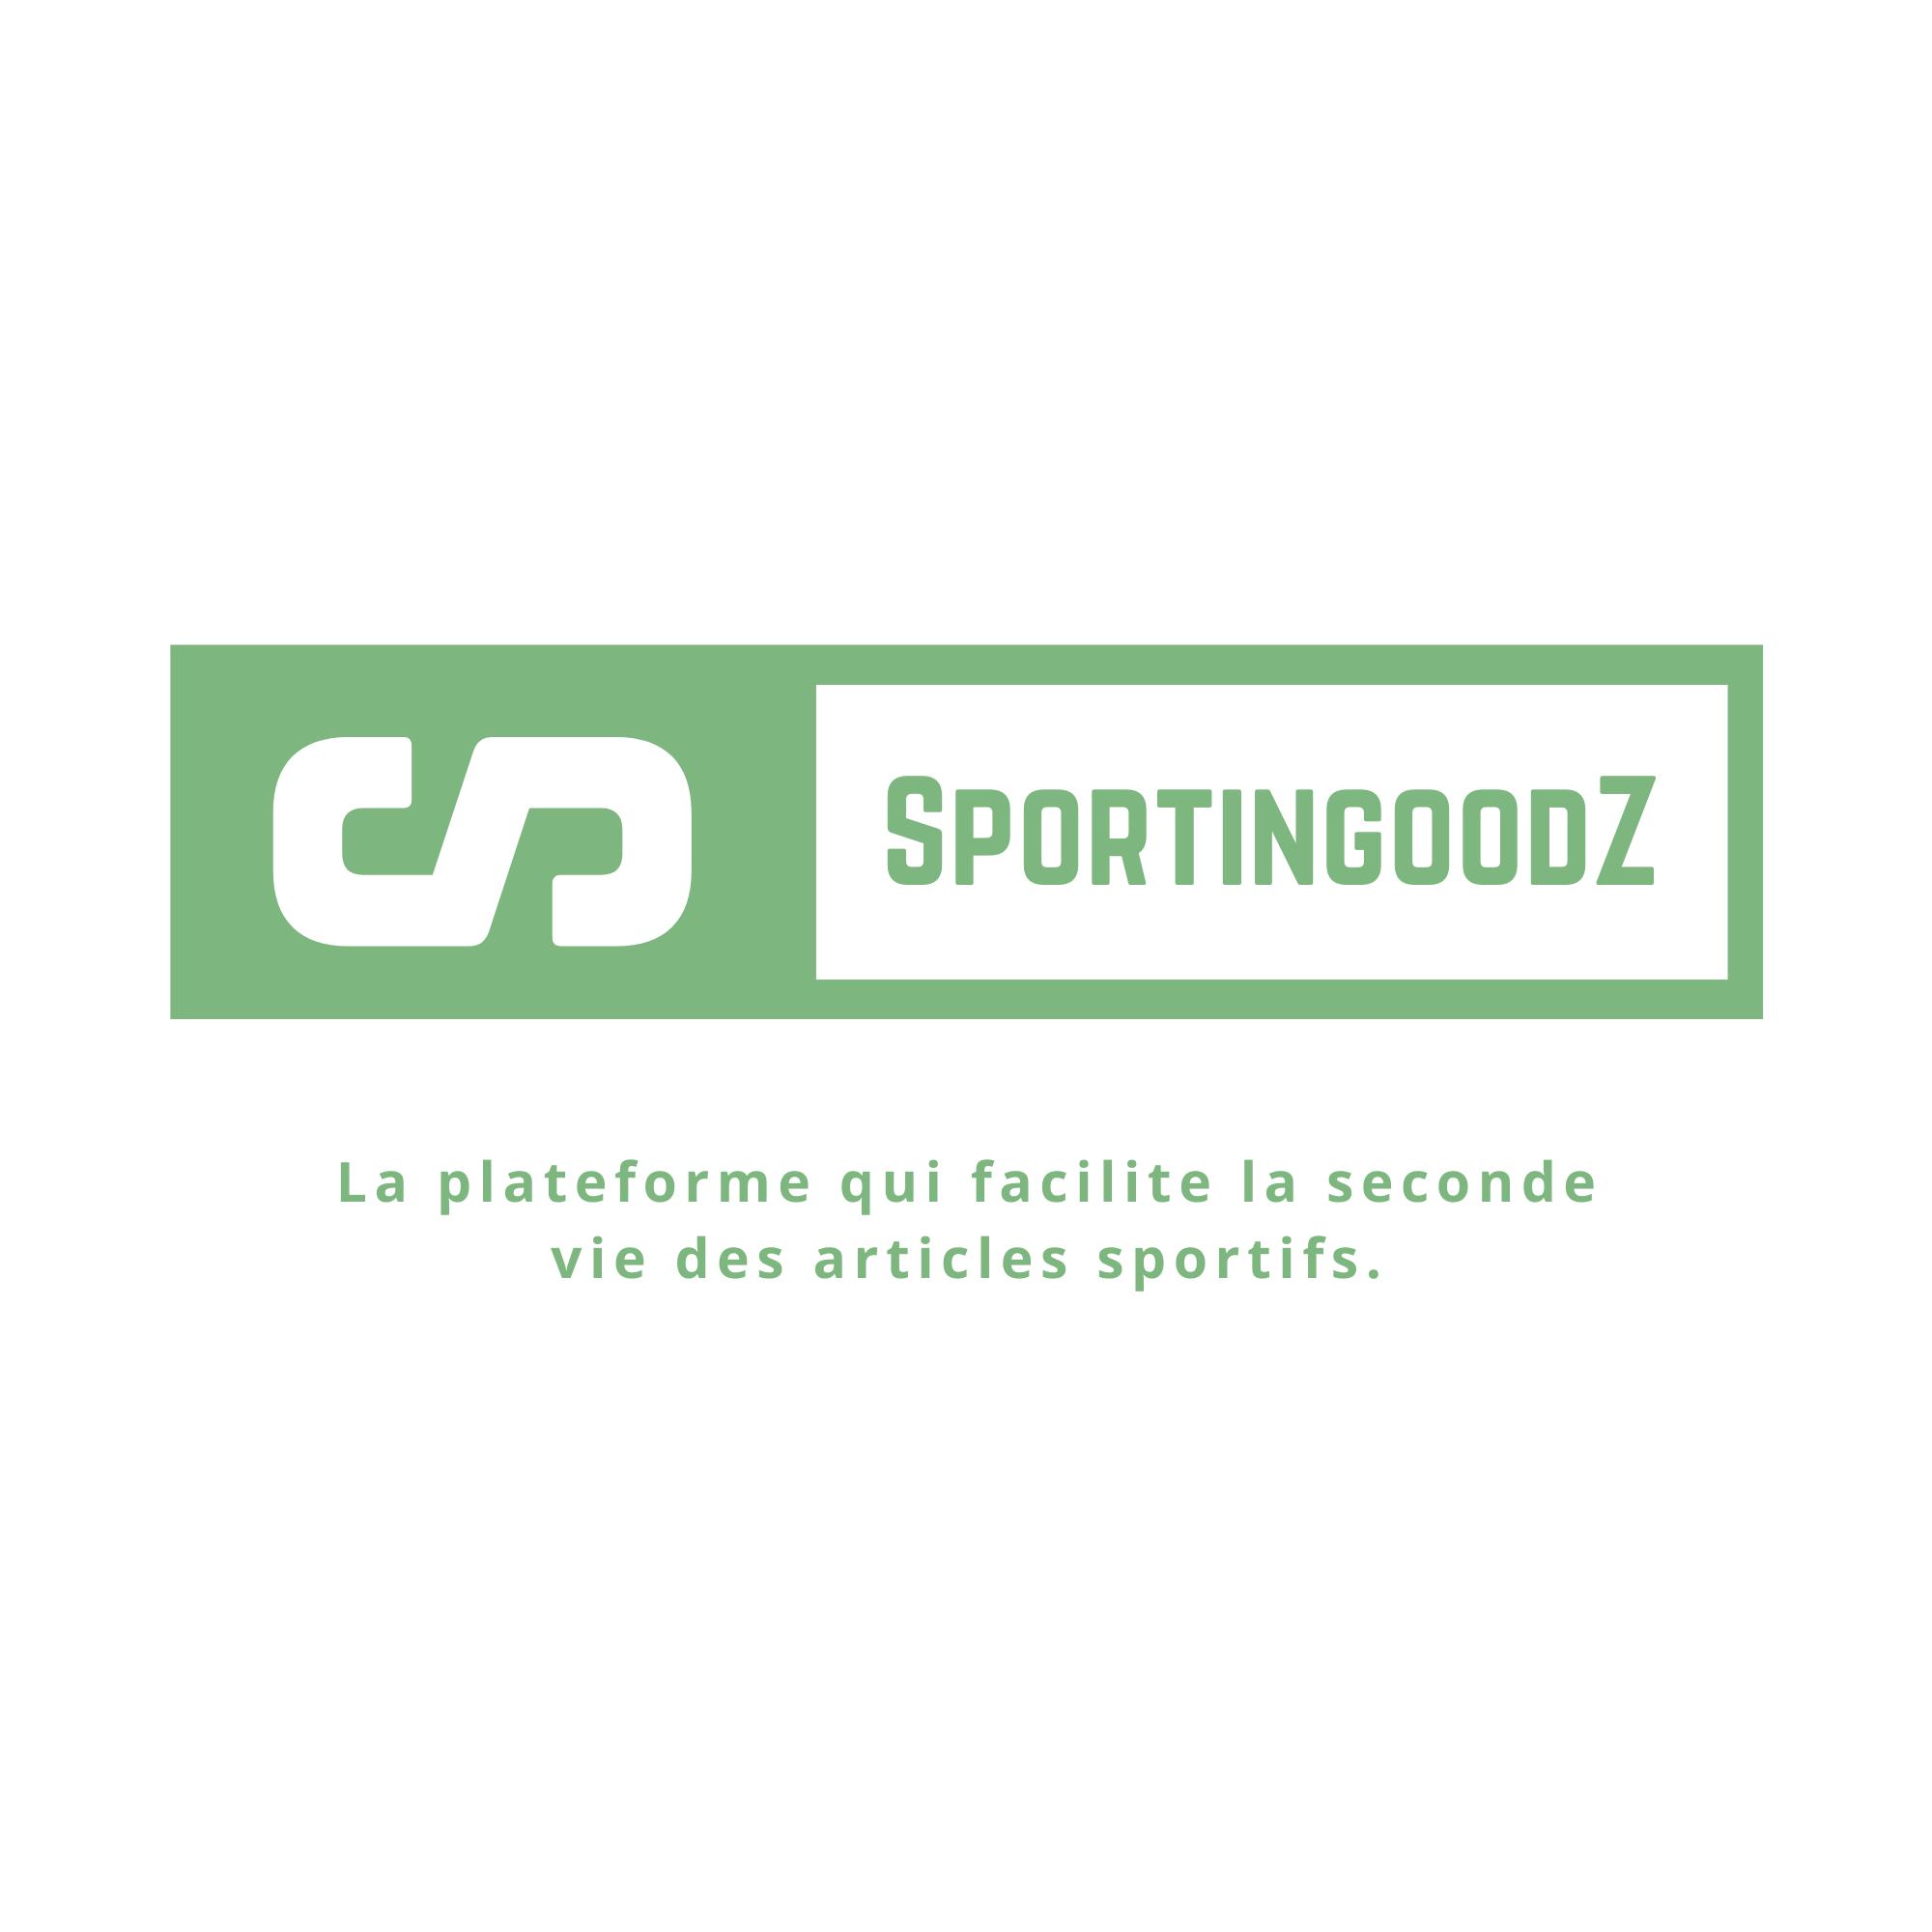 Sportingoodz